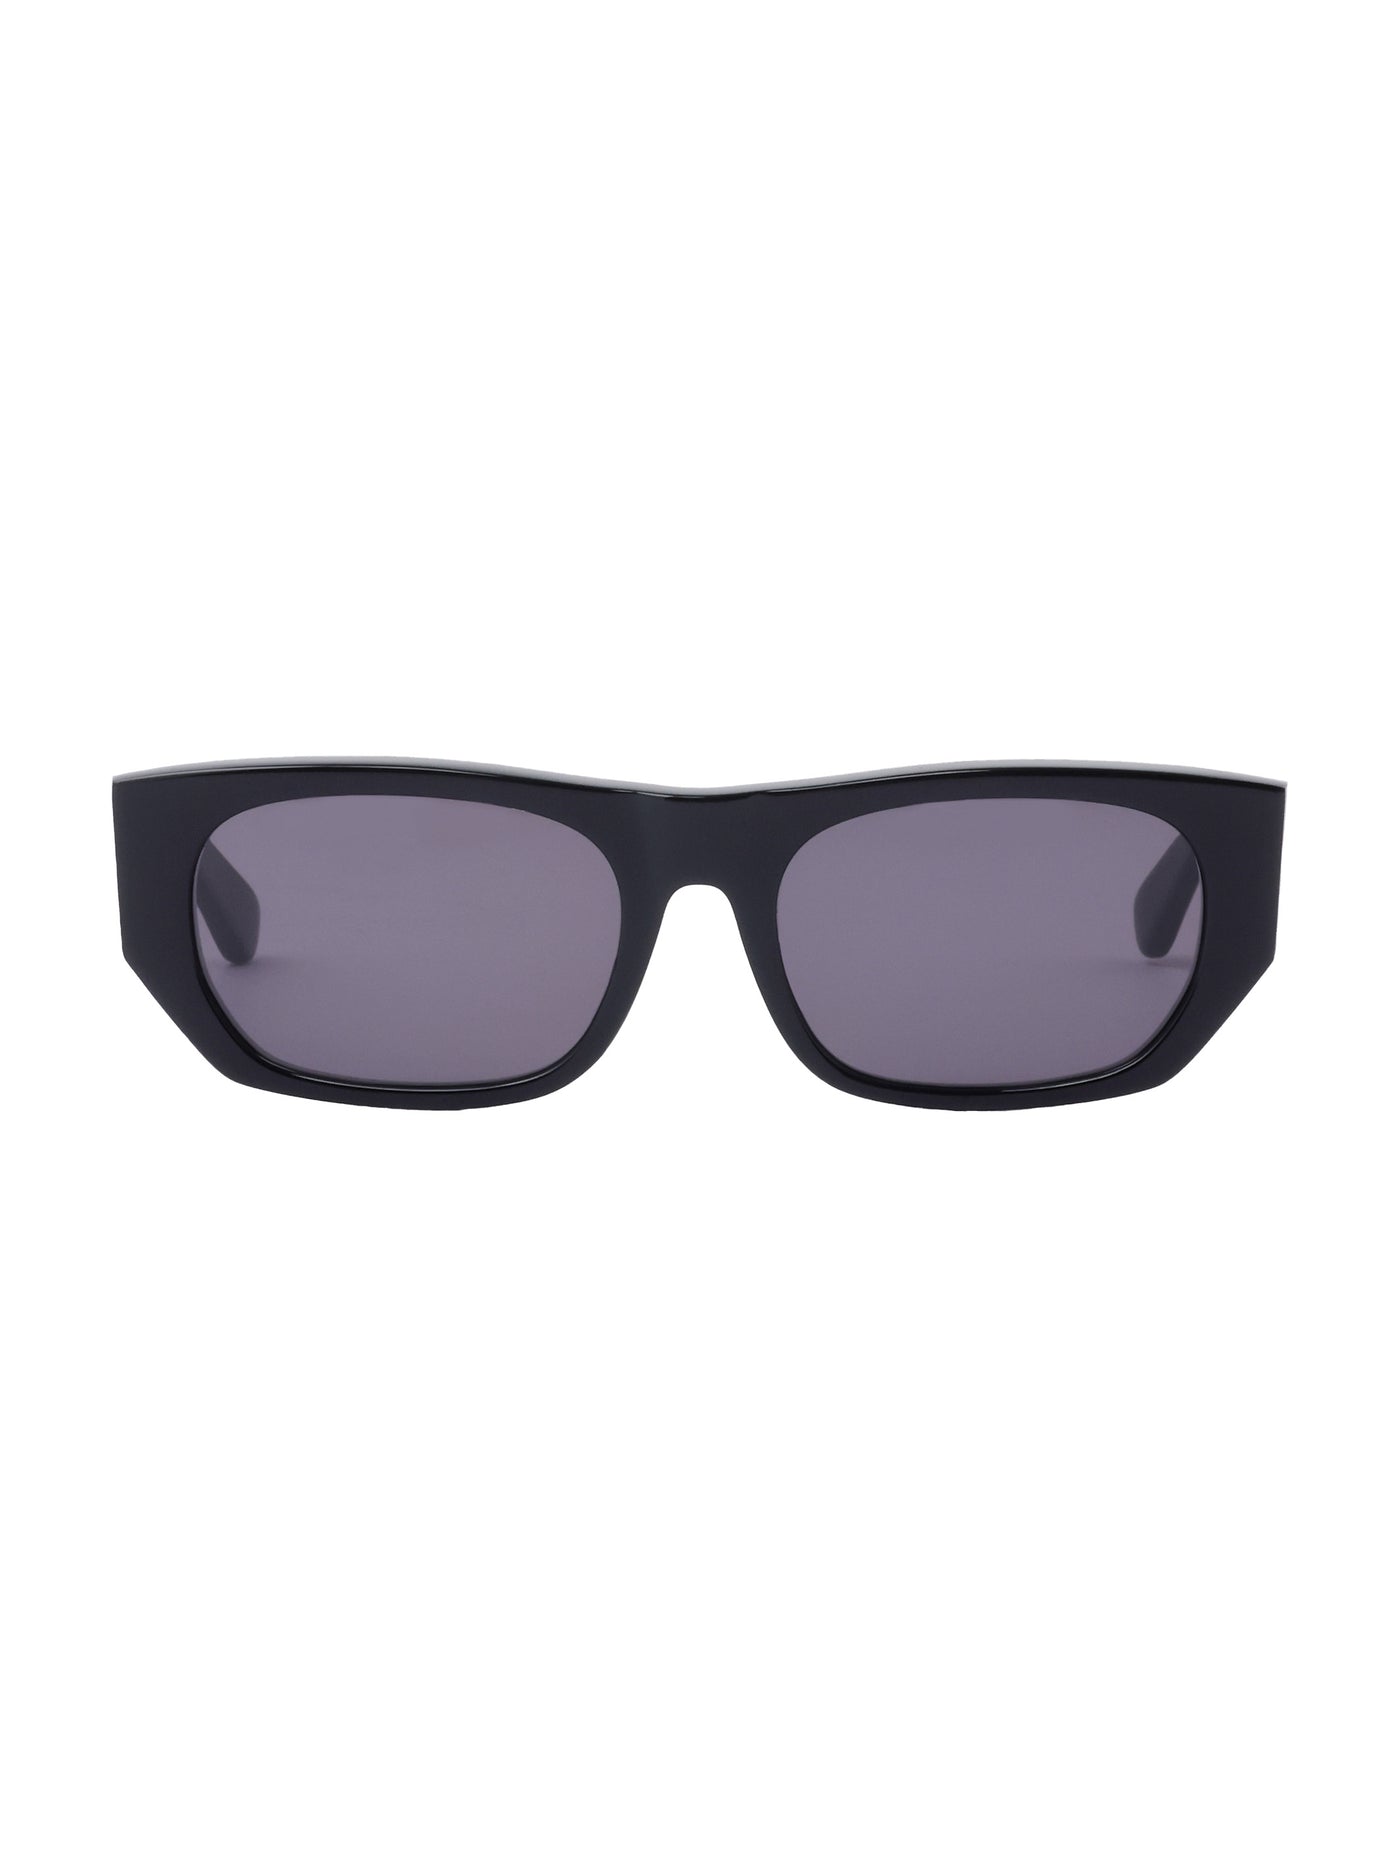 Glasses "Lunetta BADA" N0.23 SUN | Gloss black